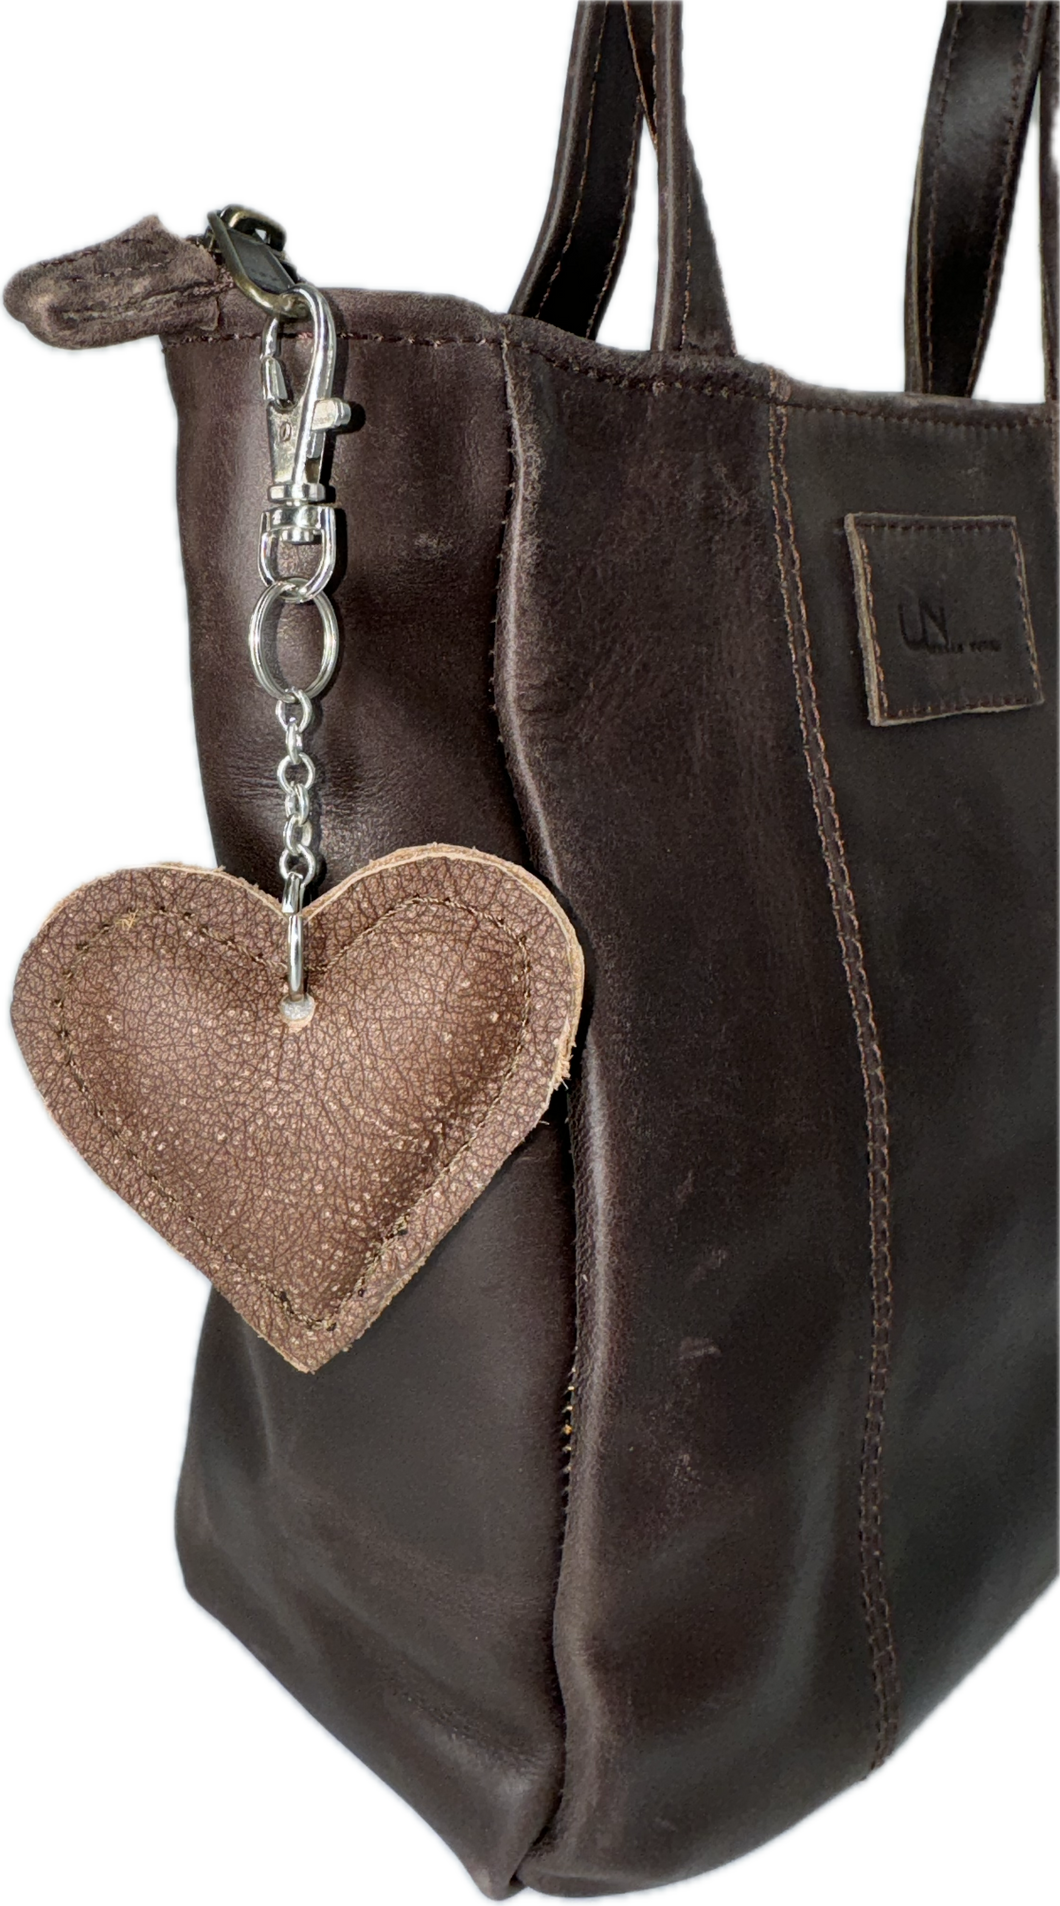 Heart Key Chain / Bag Accessory - Buffed Spice